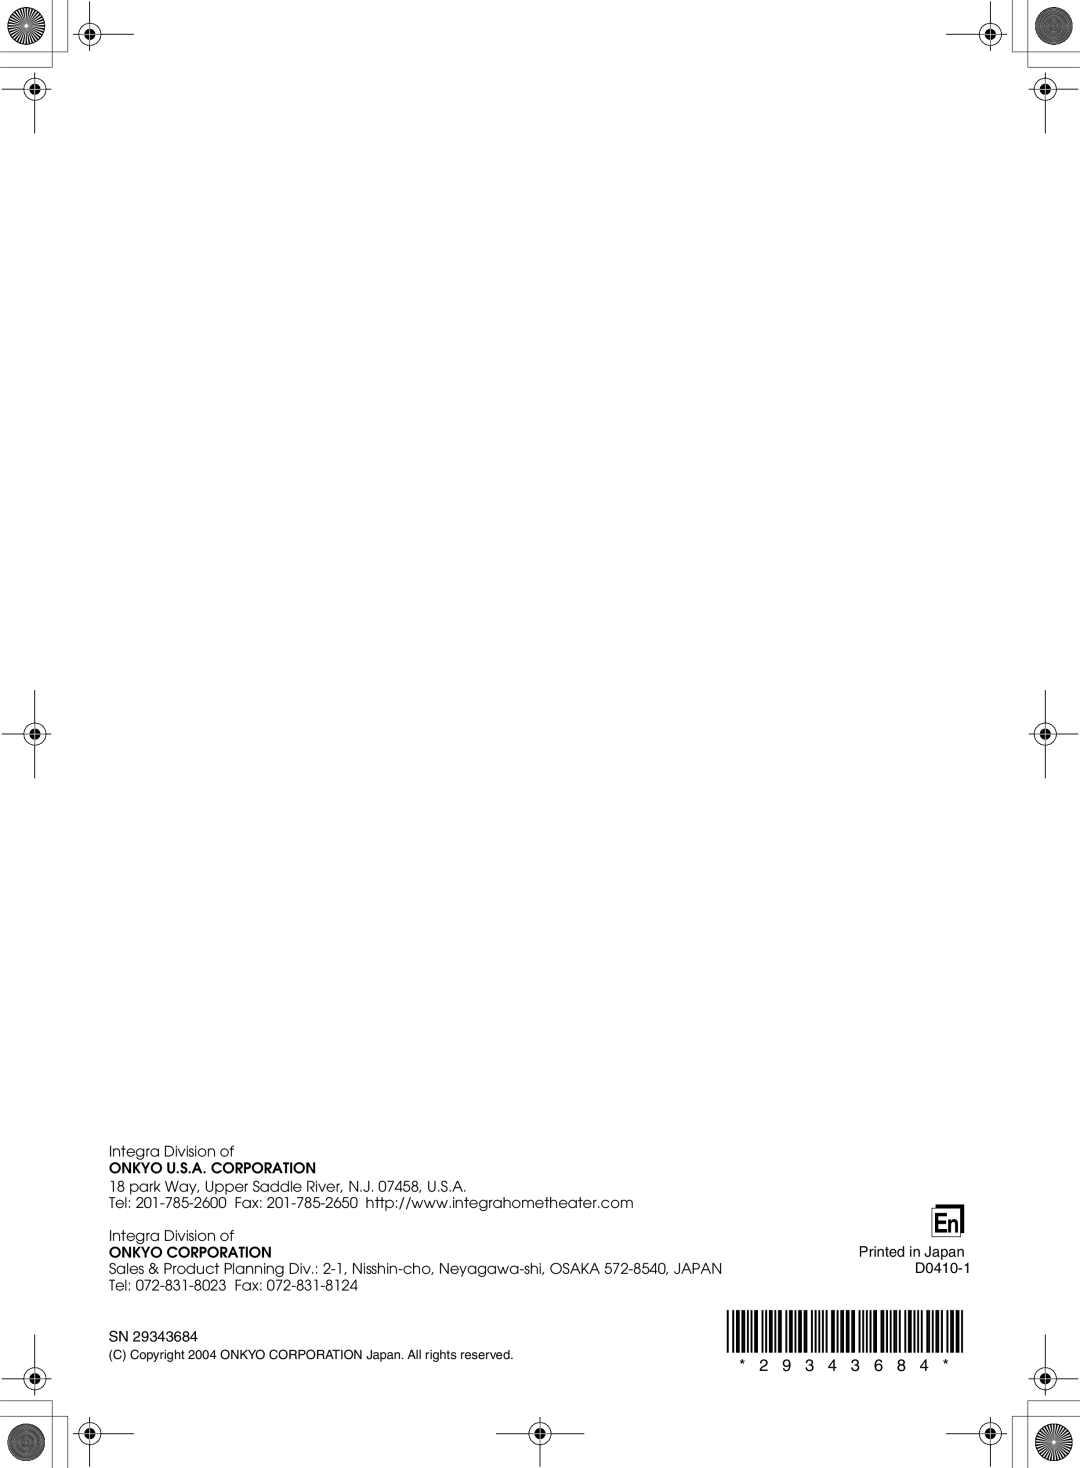 Integra DTR-10.5 instruction manual 2 9 3 4 3 6 8, Printed in Japan D0410-1 